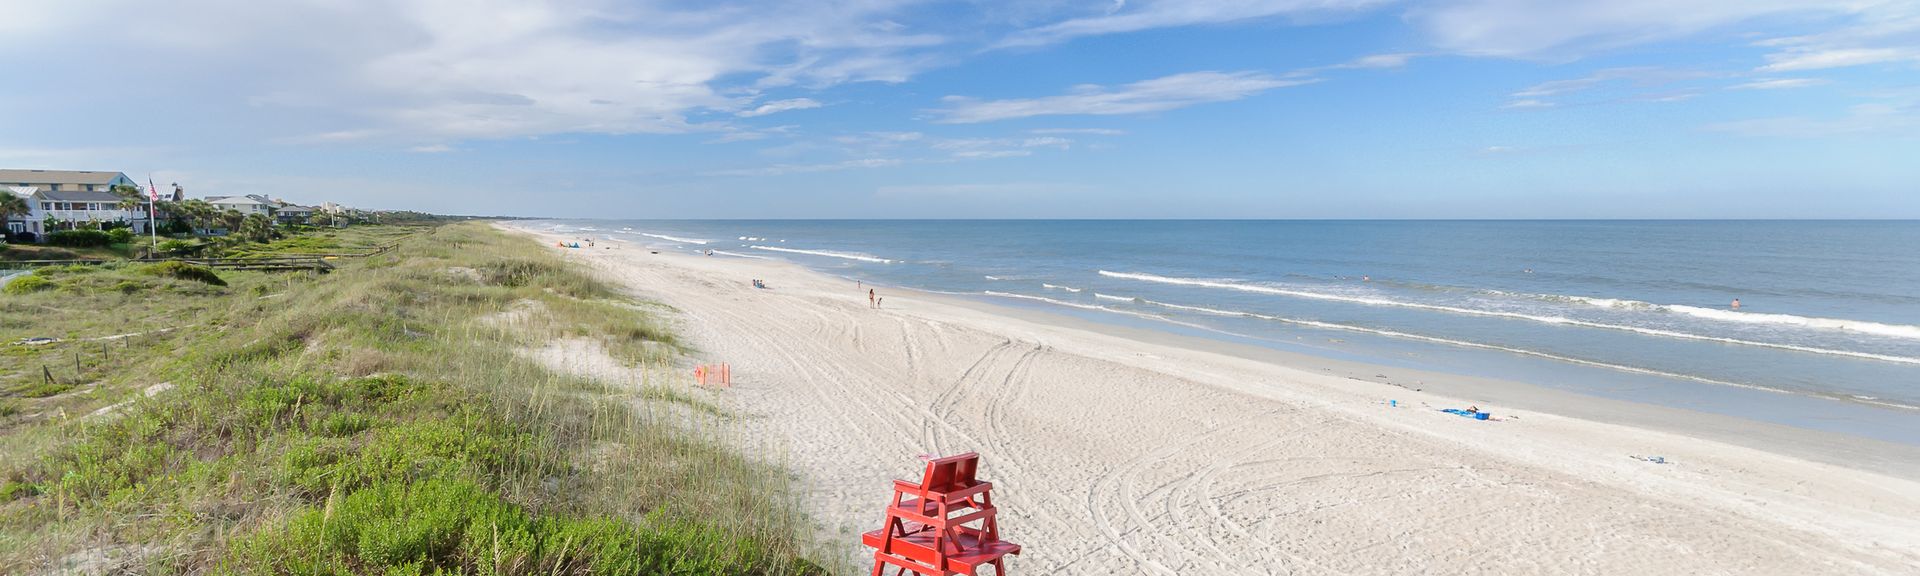 Vrbo® | Jacksonville Beach Pier Vacation Rentals: Reviews & Booking